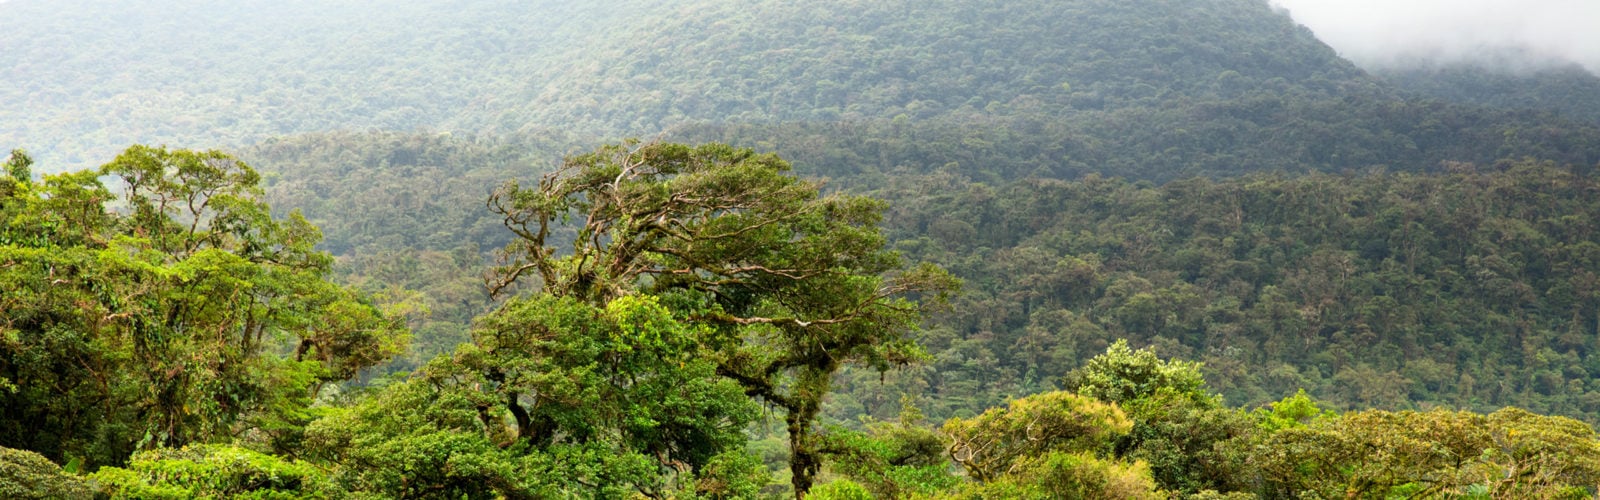 Lush green rainforest of Costa Rica